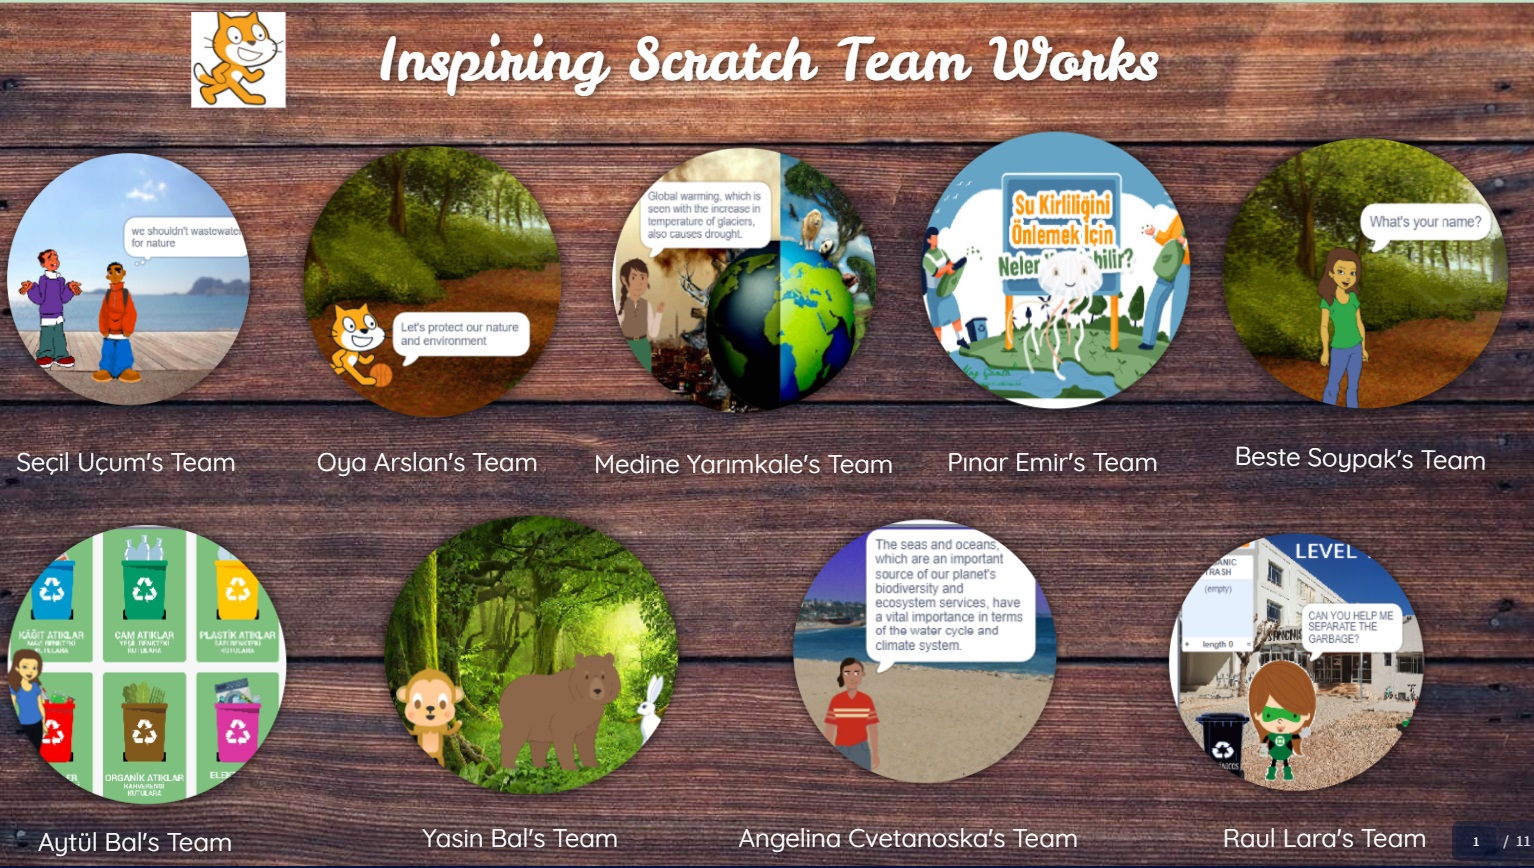 Inspiring Scratch Team works